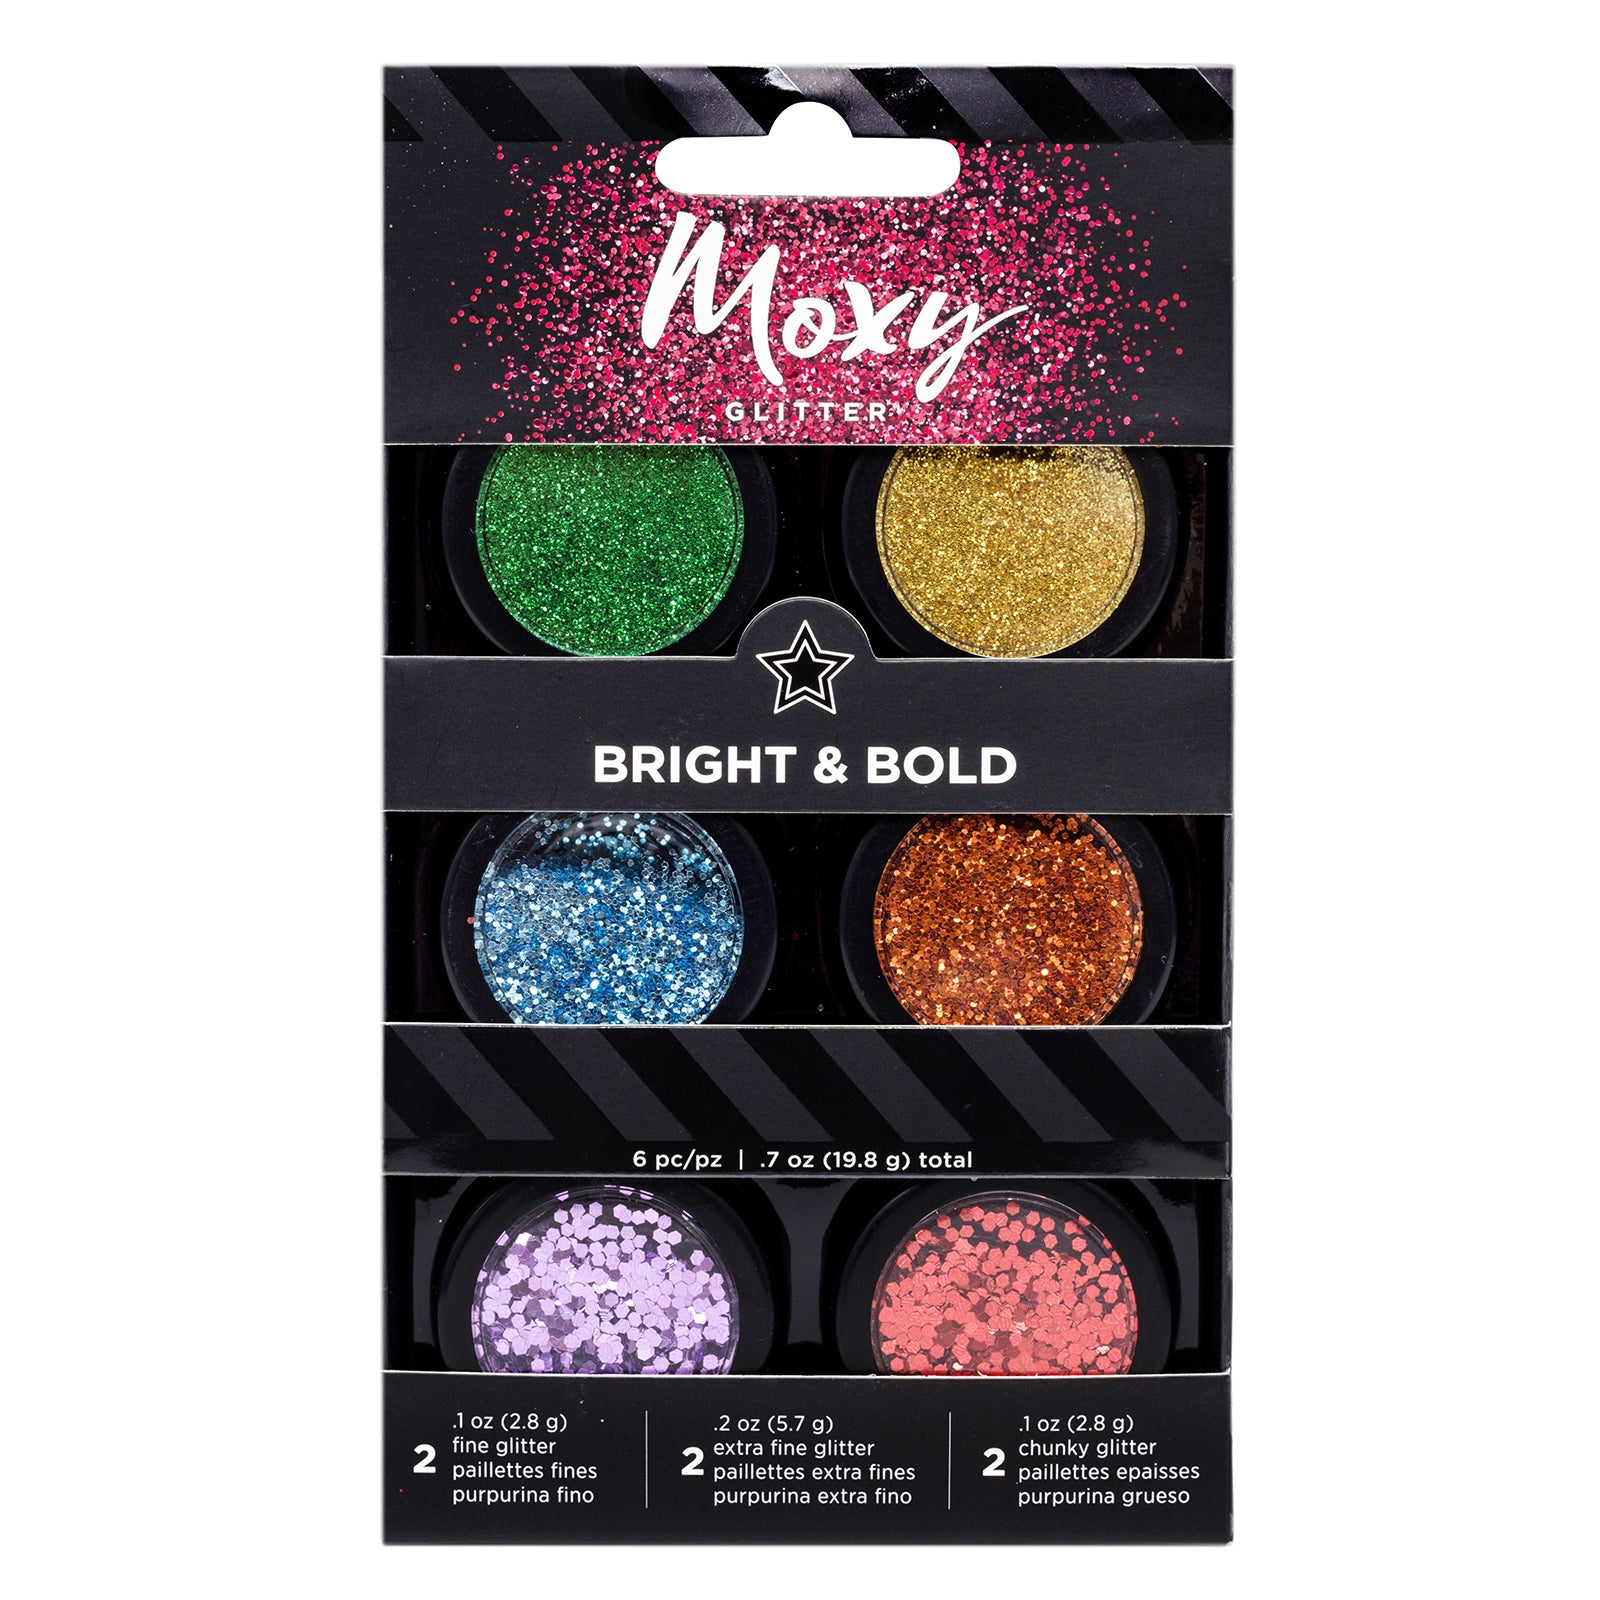 Moxy Glitter Value Pack "Bright And Bold" -Mixed Glitter Pots 6 Piece Set - CraftCutterSupply.com